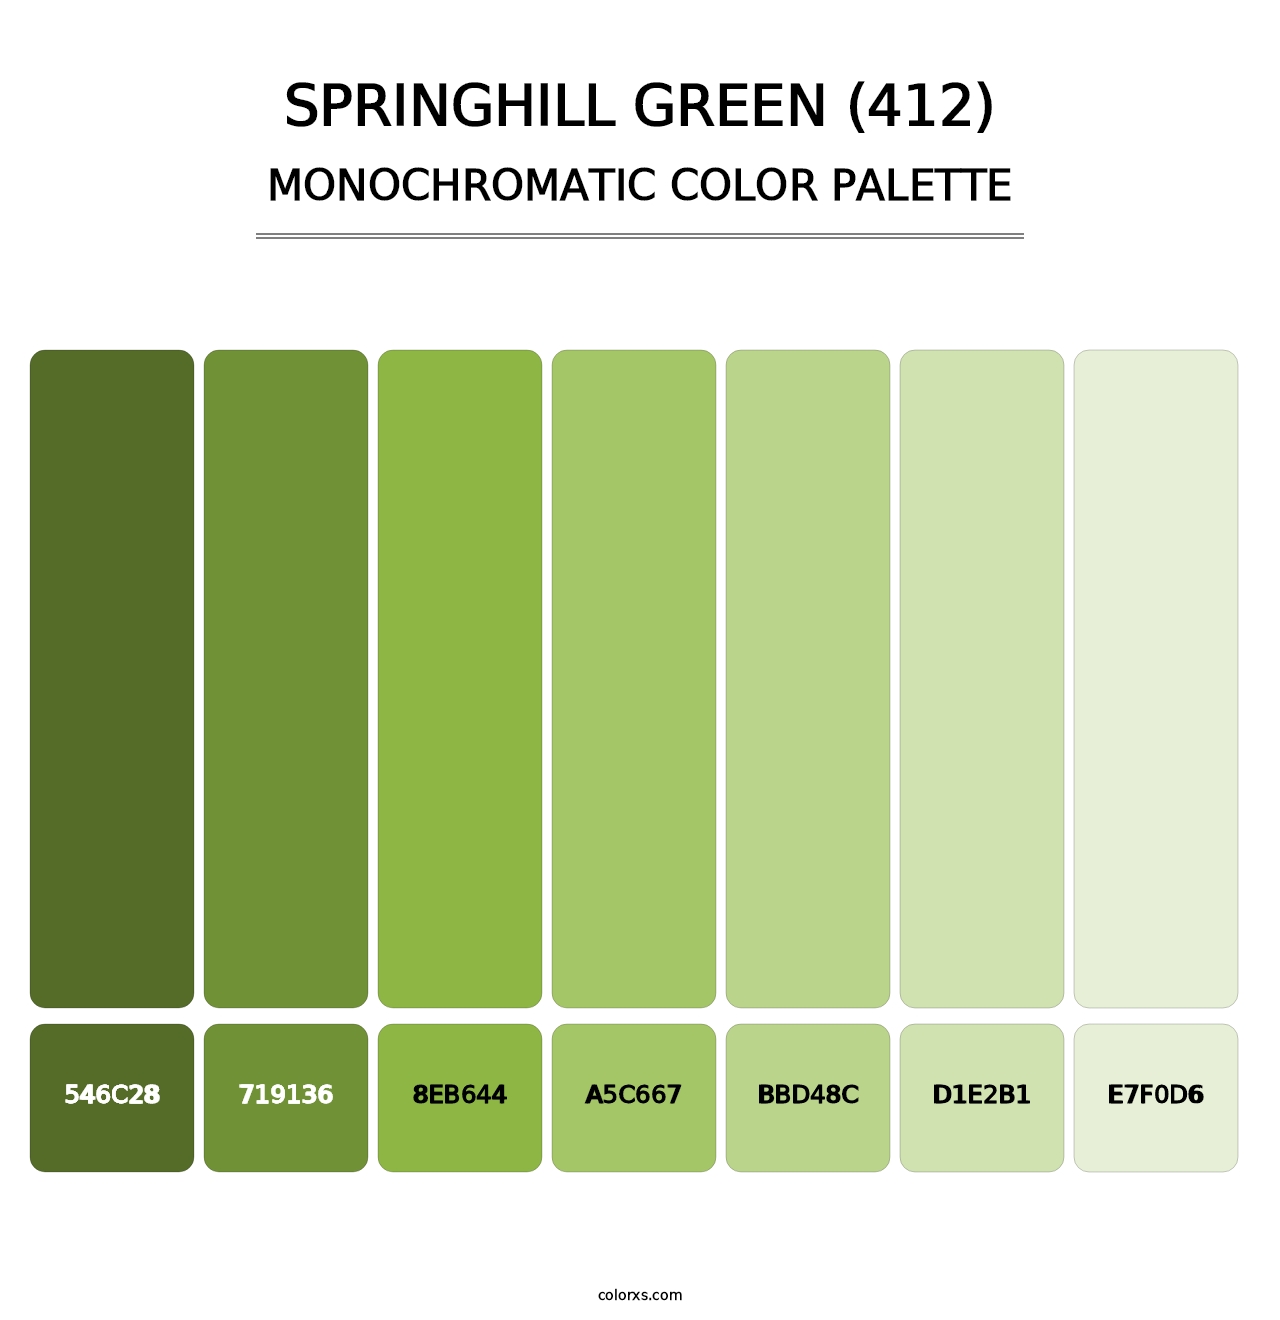 Springhill Green (412) - Monochromatic Color Palette